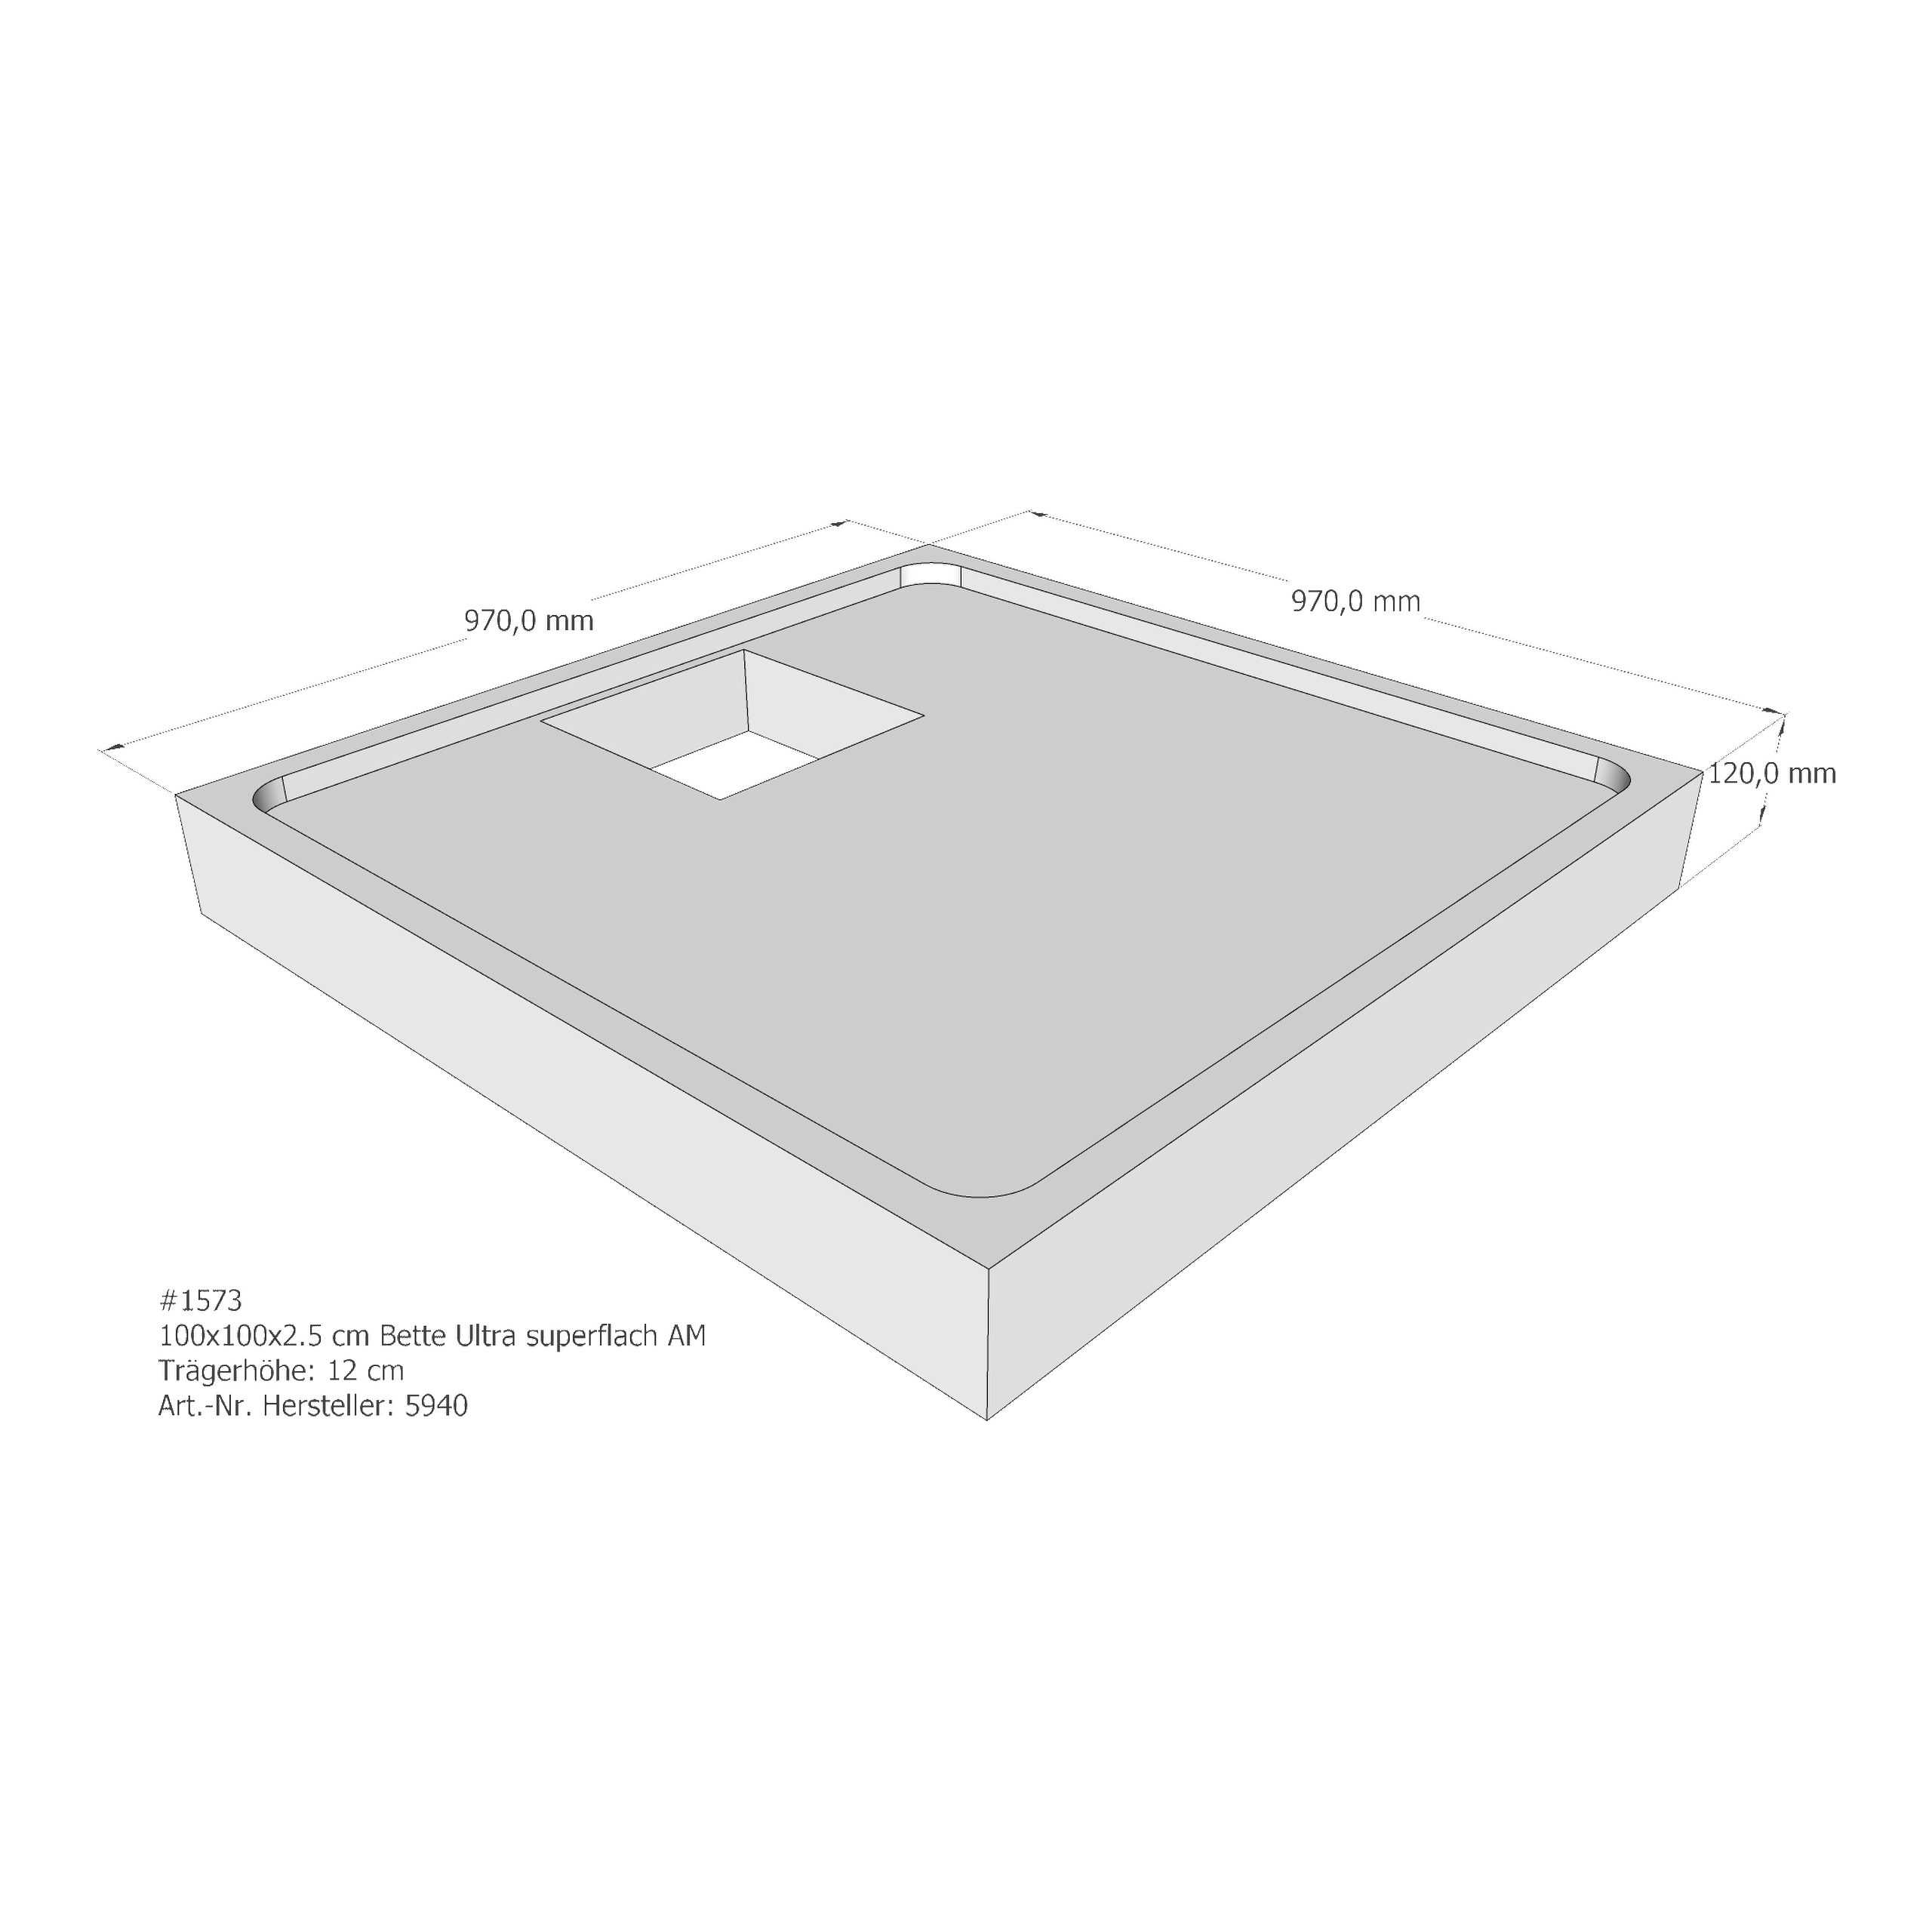 Duschwannenträger für Bette BetteUltra (superflach) 100 × 100 × 2,5 cm